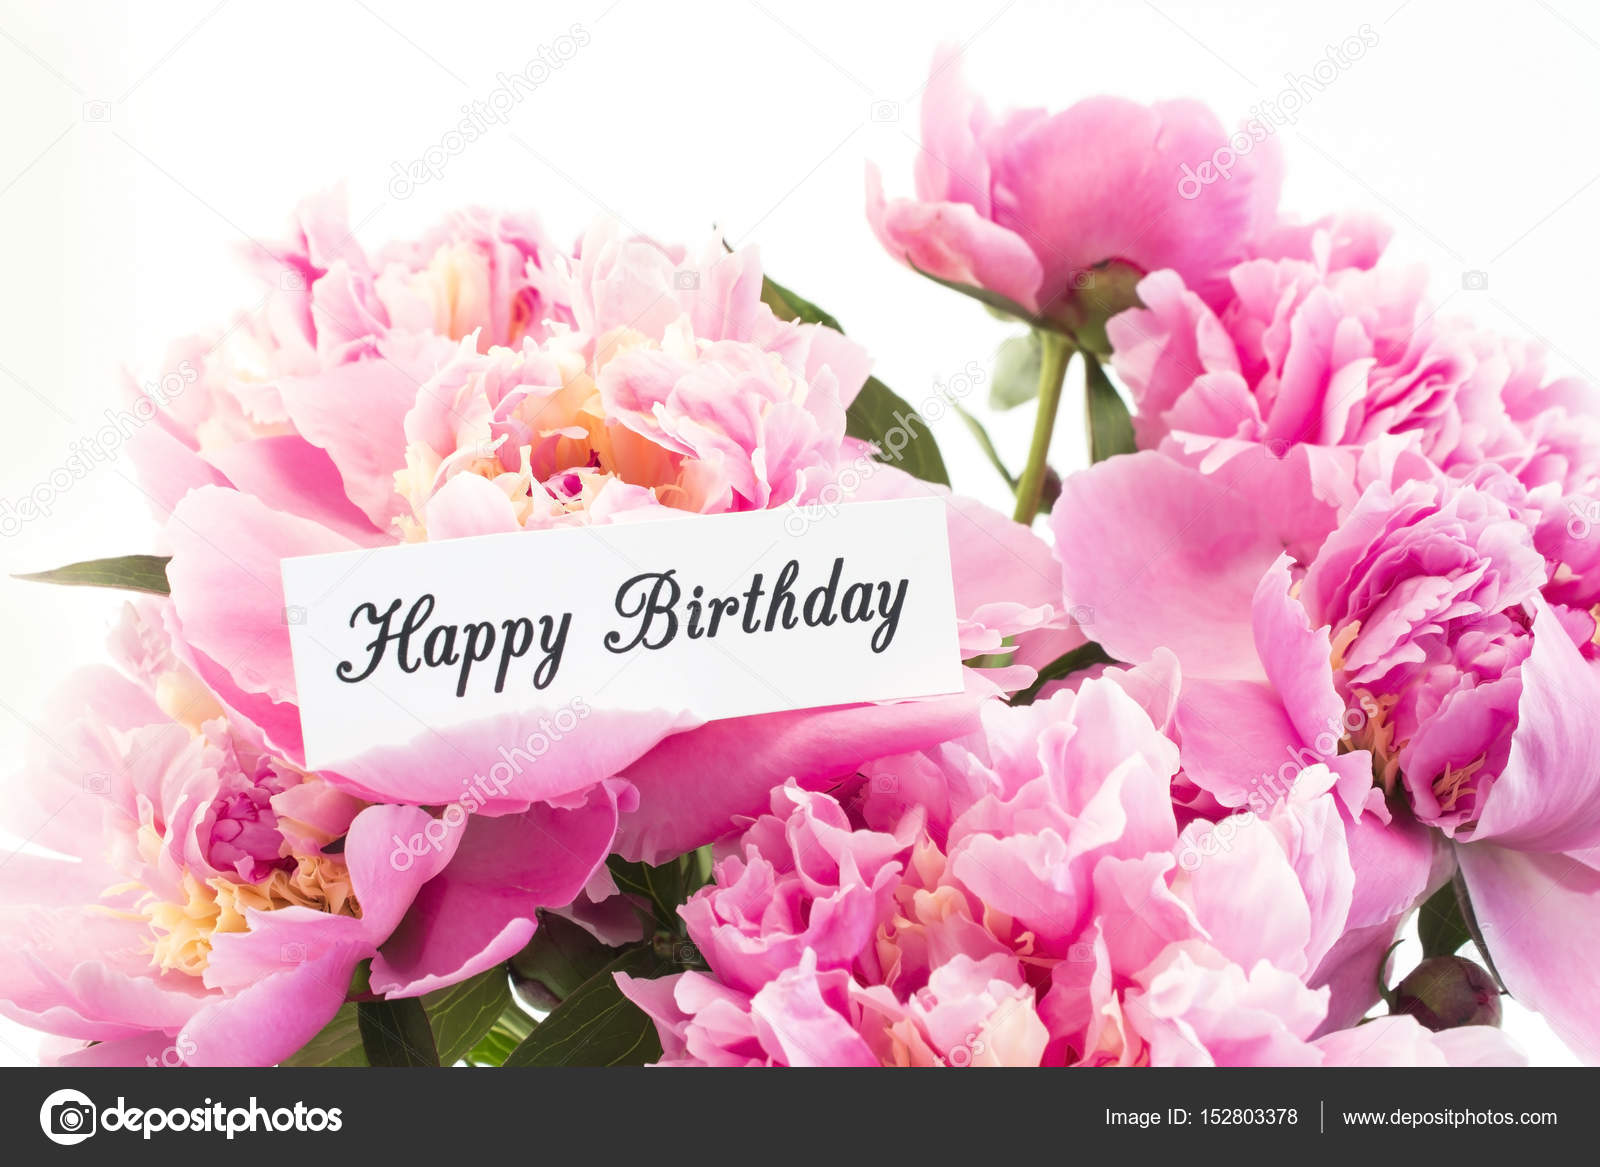 depositphotos_152803378-stock-photo-happy-birthday-card-with-bouquet.jpg